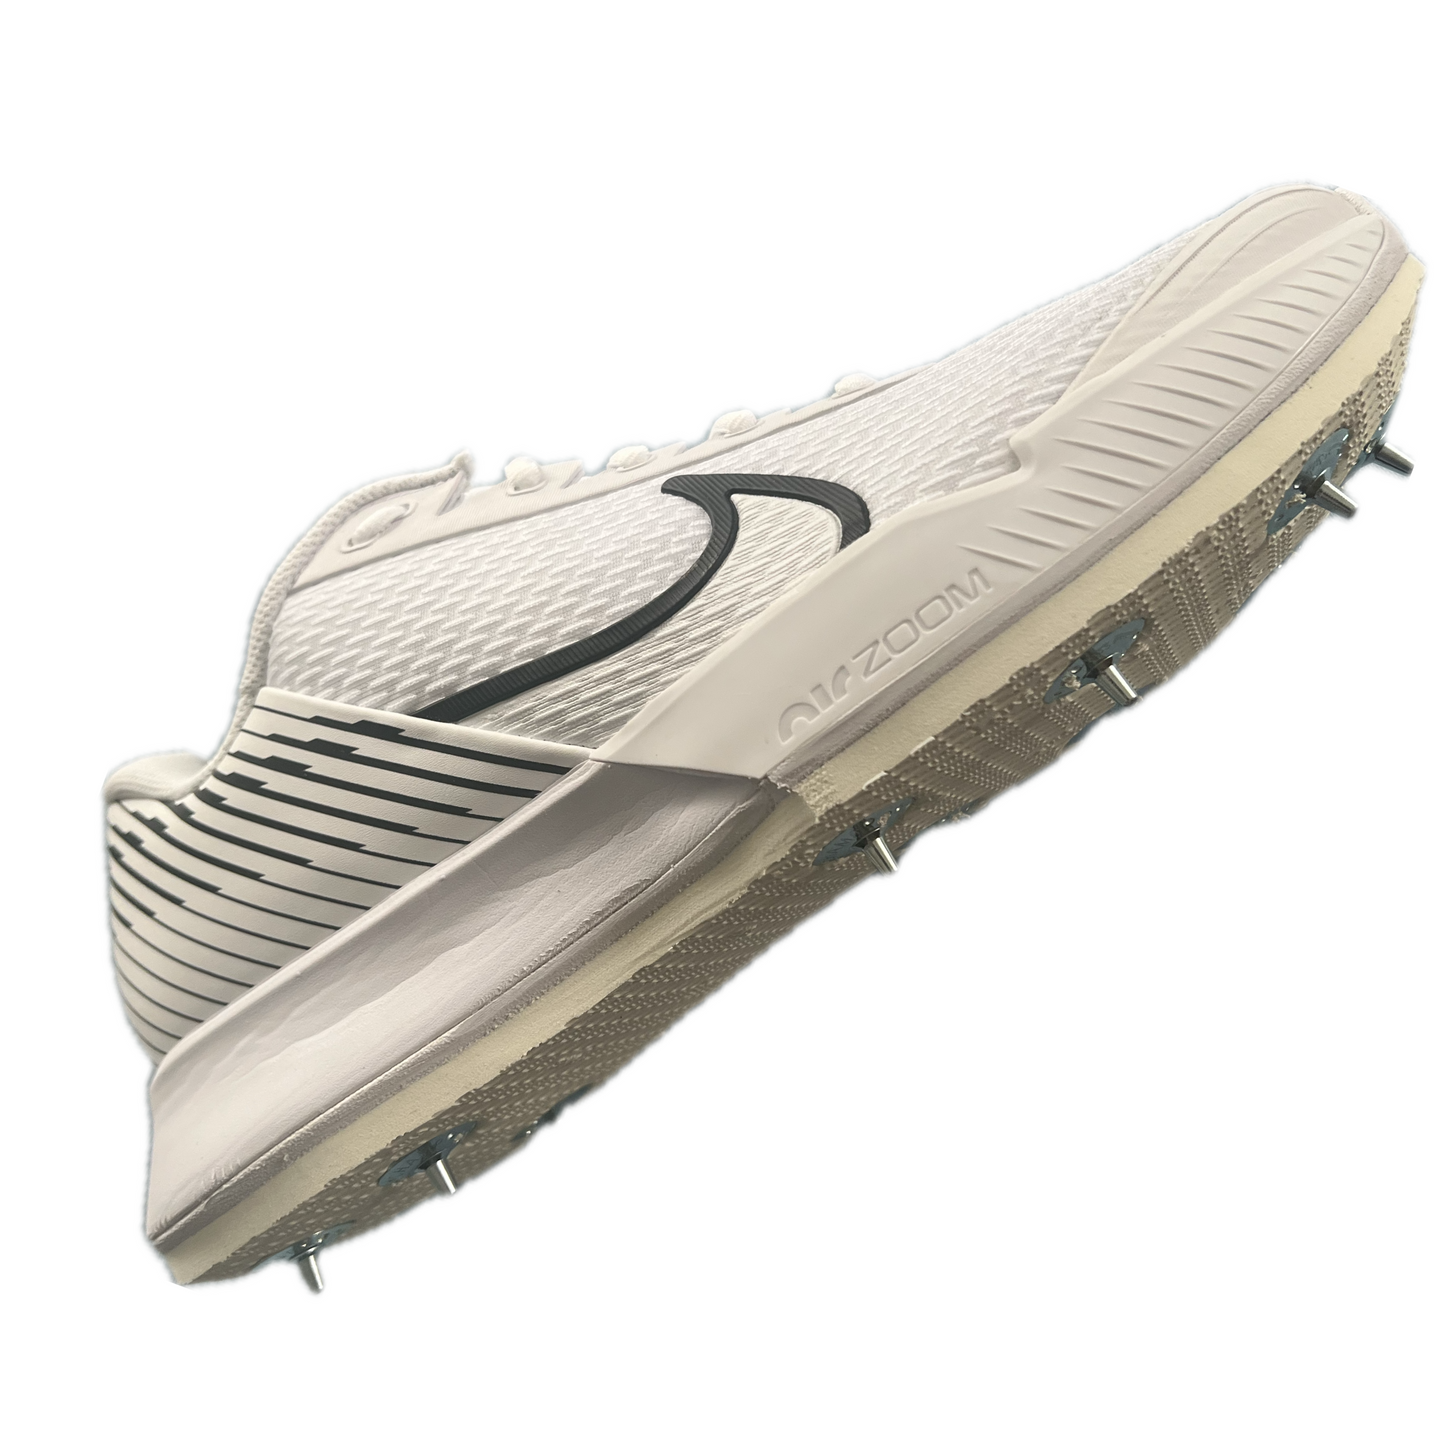 Pre-Spiked NikeCourt Air Zoom Vapor Pro 2 Men's Tennis Cricket Shoes